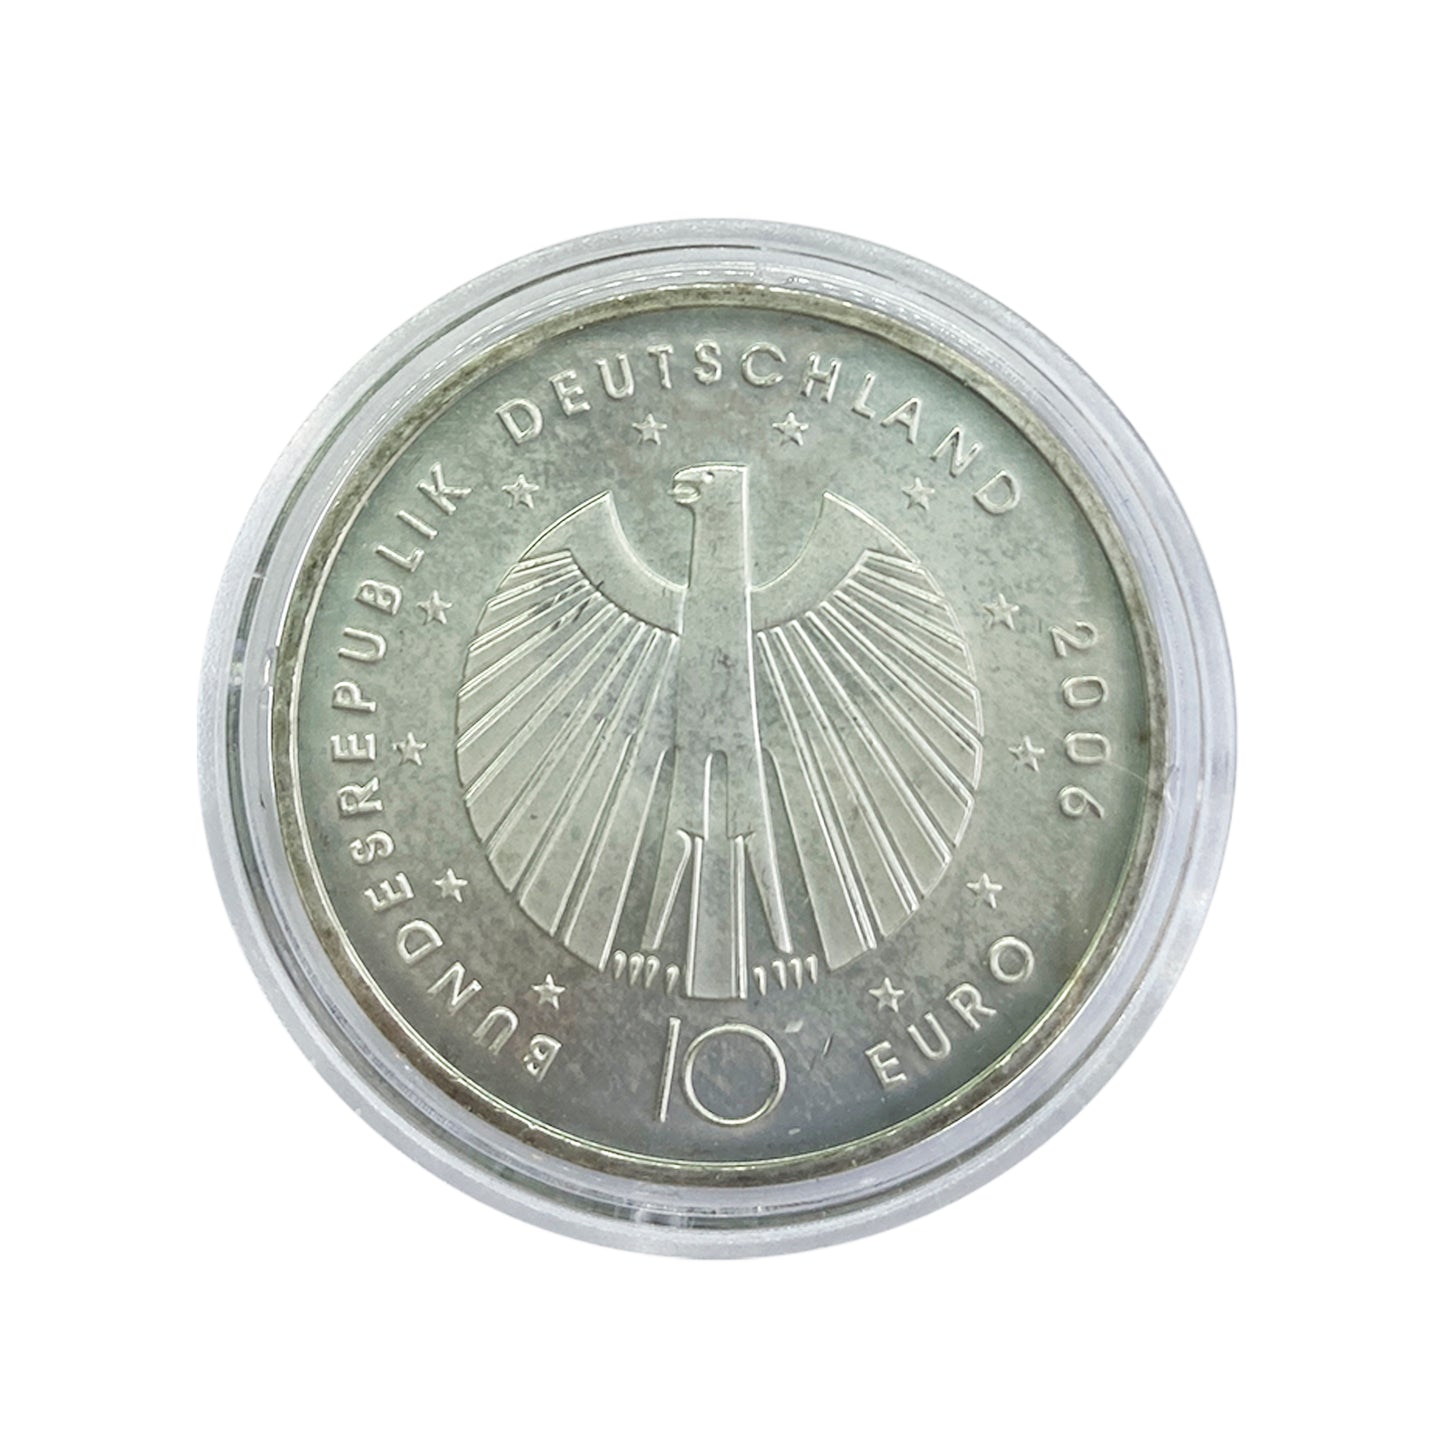 Alemania - Moneda 10 euros plata 2006 - Copa del Mundo FIFA 2006